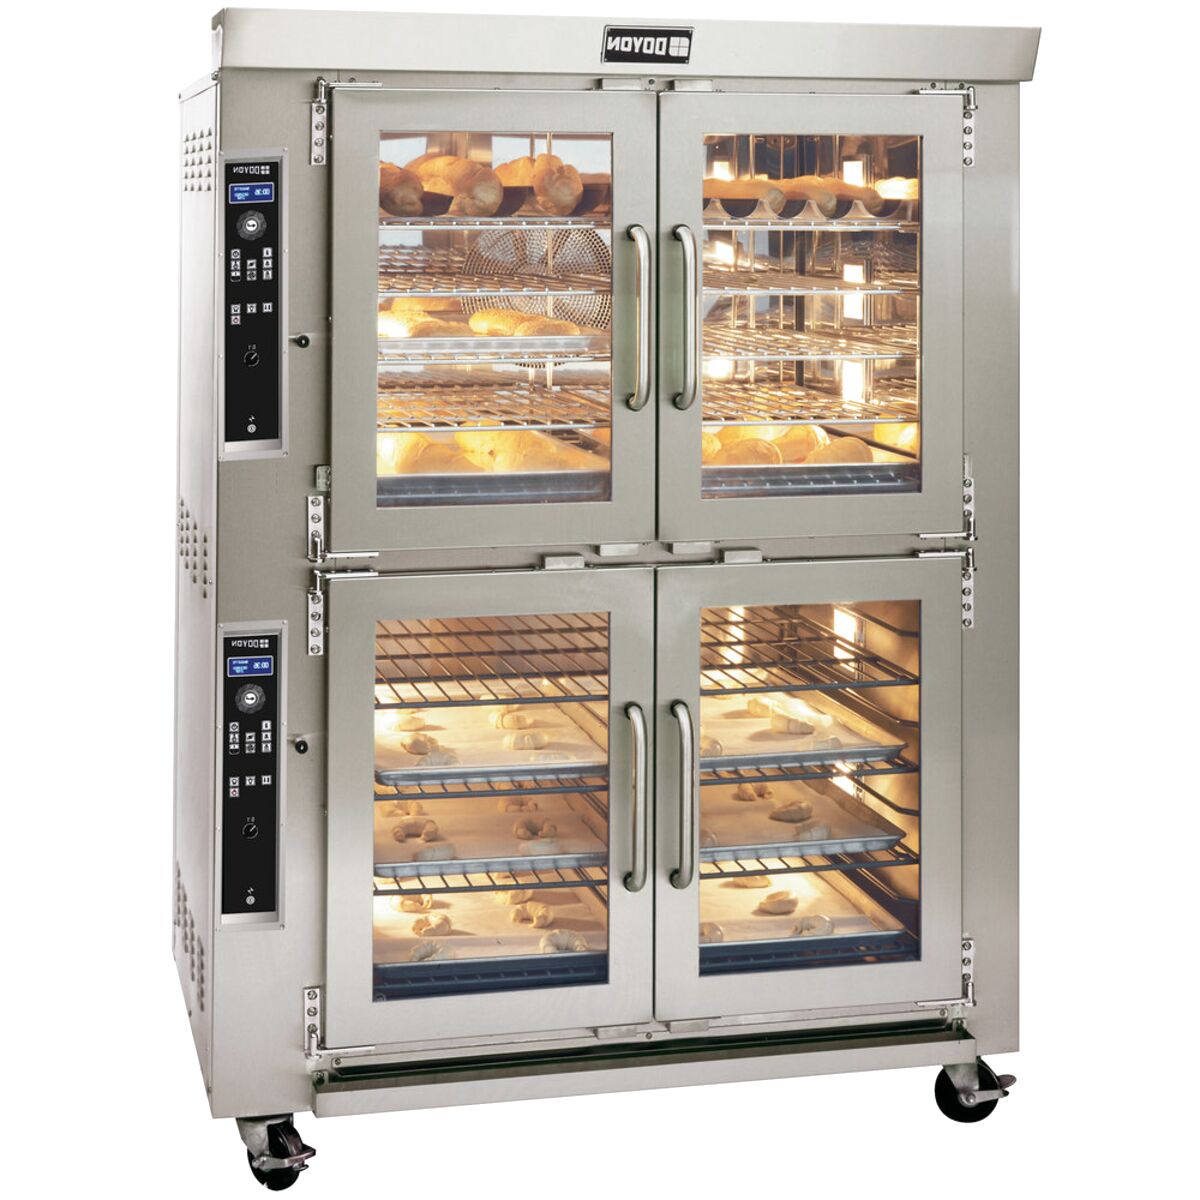 Oven Roti: Panduan Lengkap untuk Memilih dan Menggunakan Oven Roti yang ...